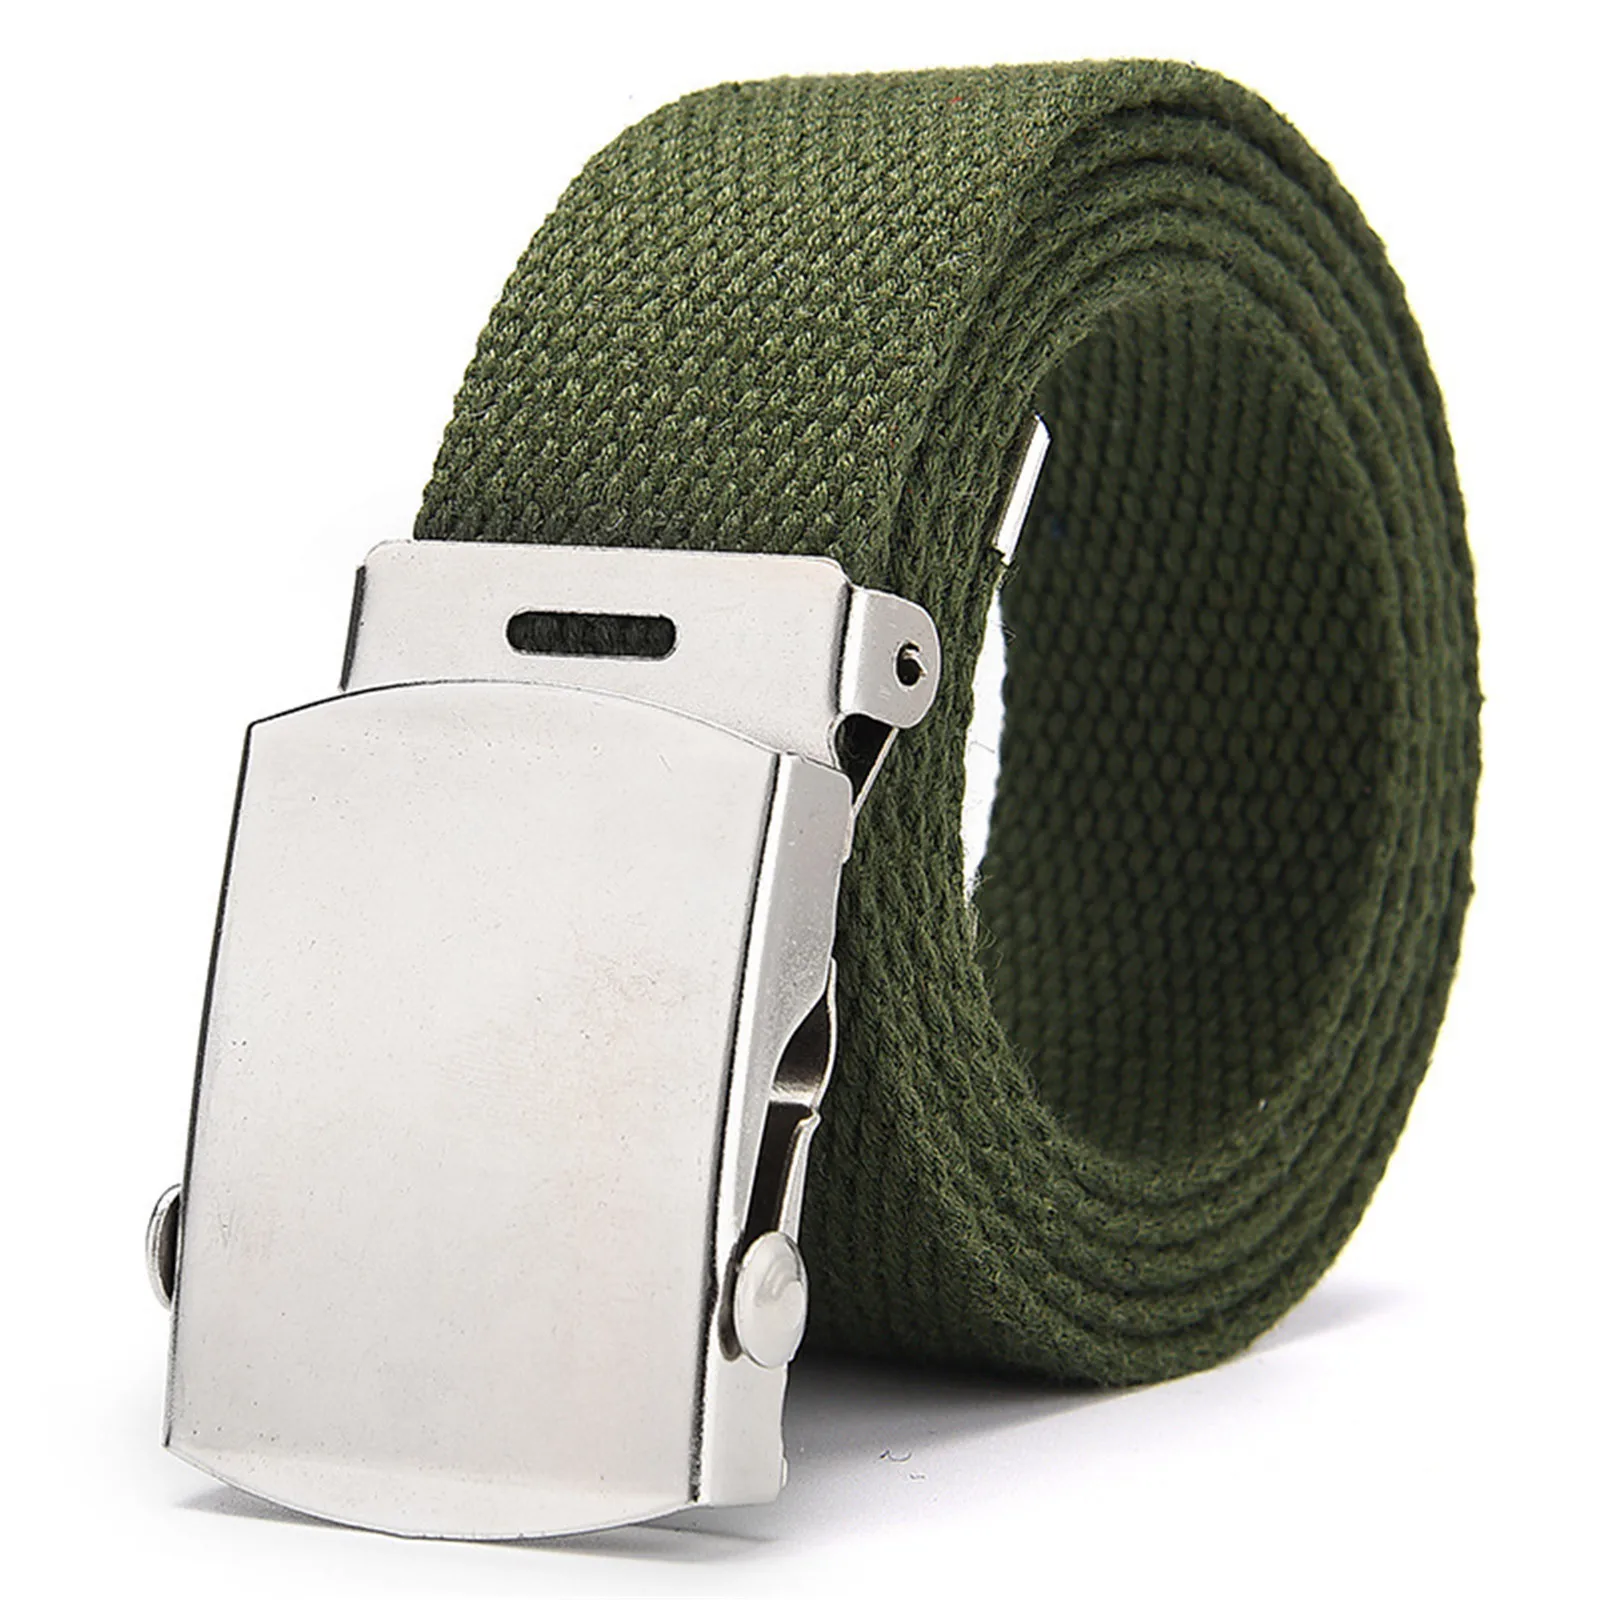 High Quality Canvas Belt Unisex Luxury Strap Tactical Military Canvas Waistband Outdoor Training Belt Metal Buckle Belts Black belts